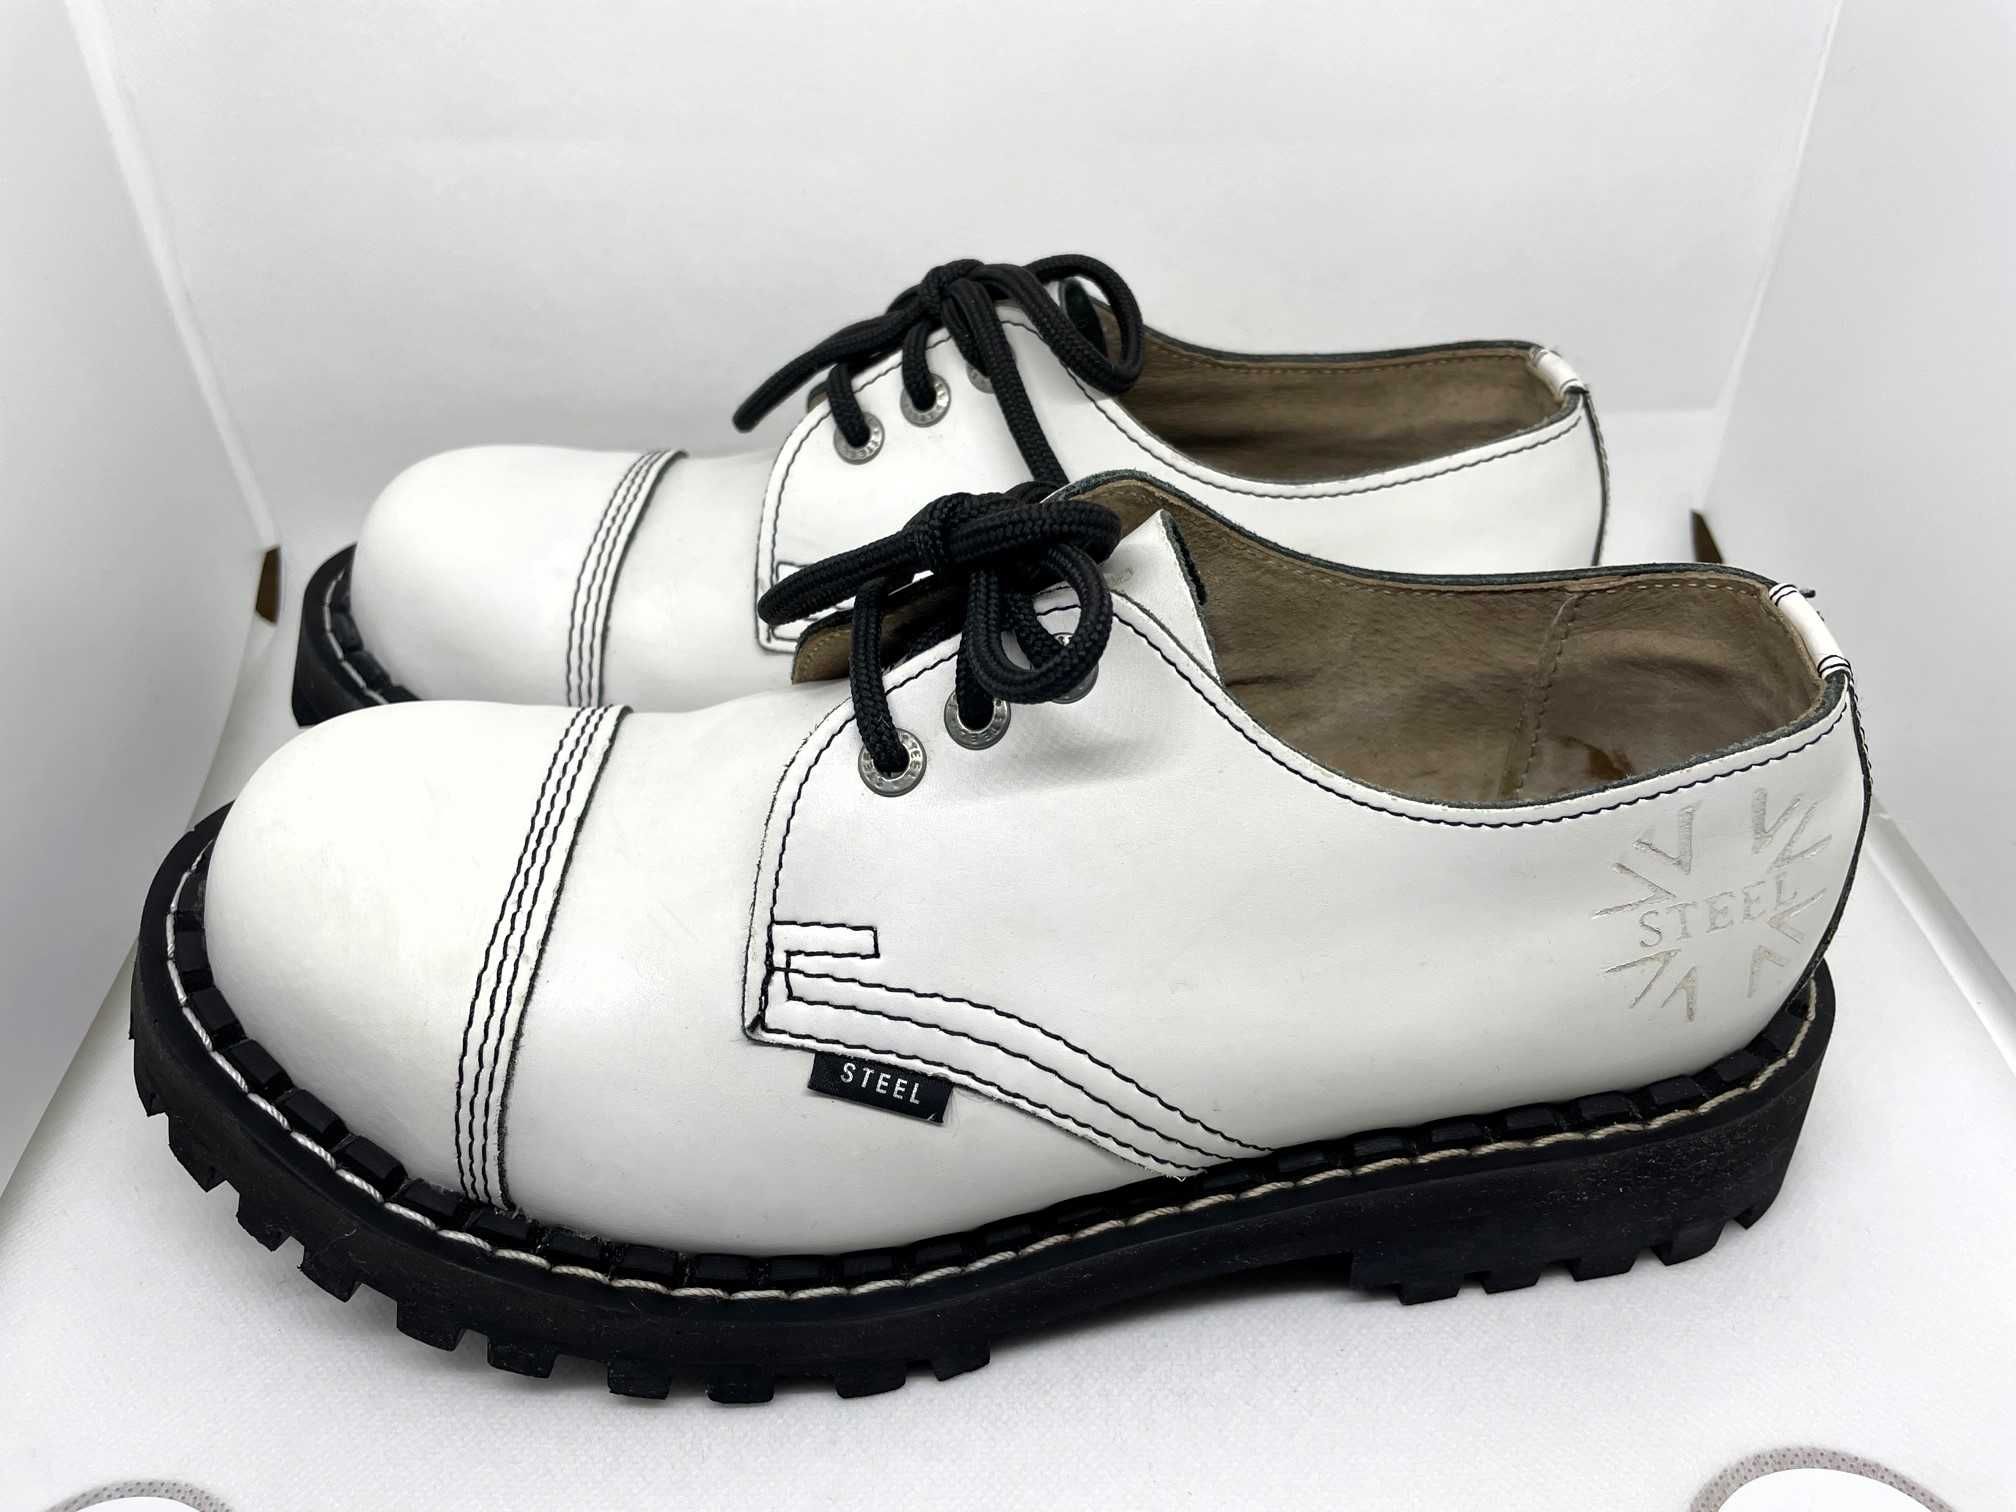 Buty glany STEEL Unisex białe 3-dziurkowe jak nowe r. 41, 26 cm